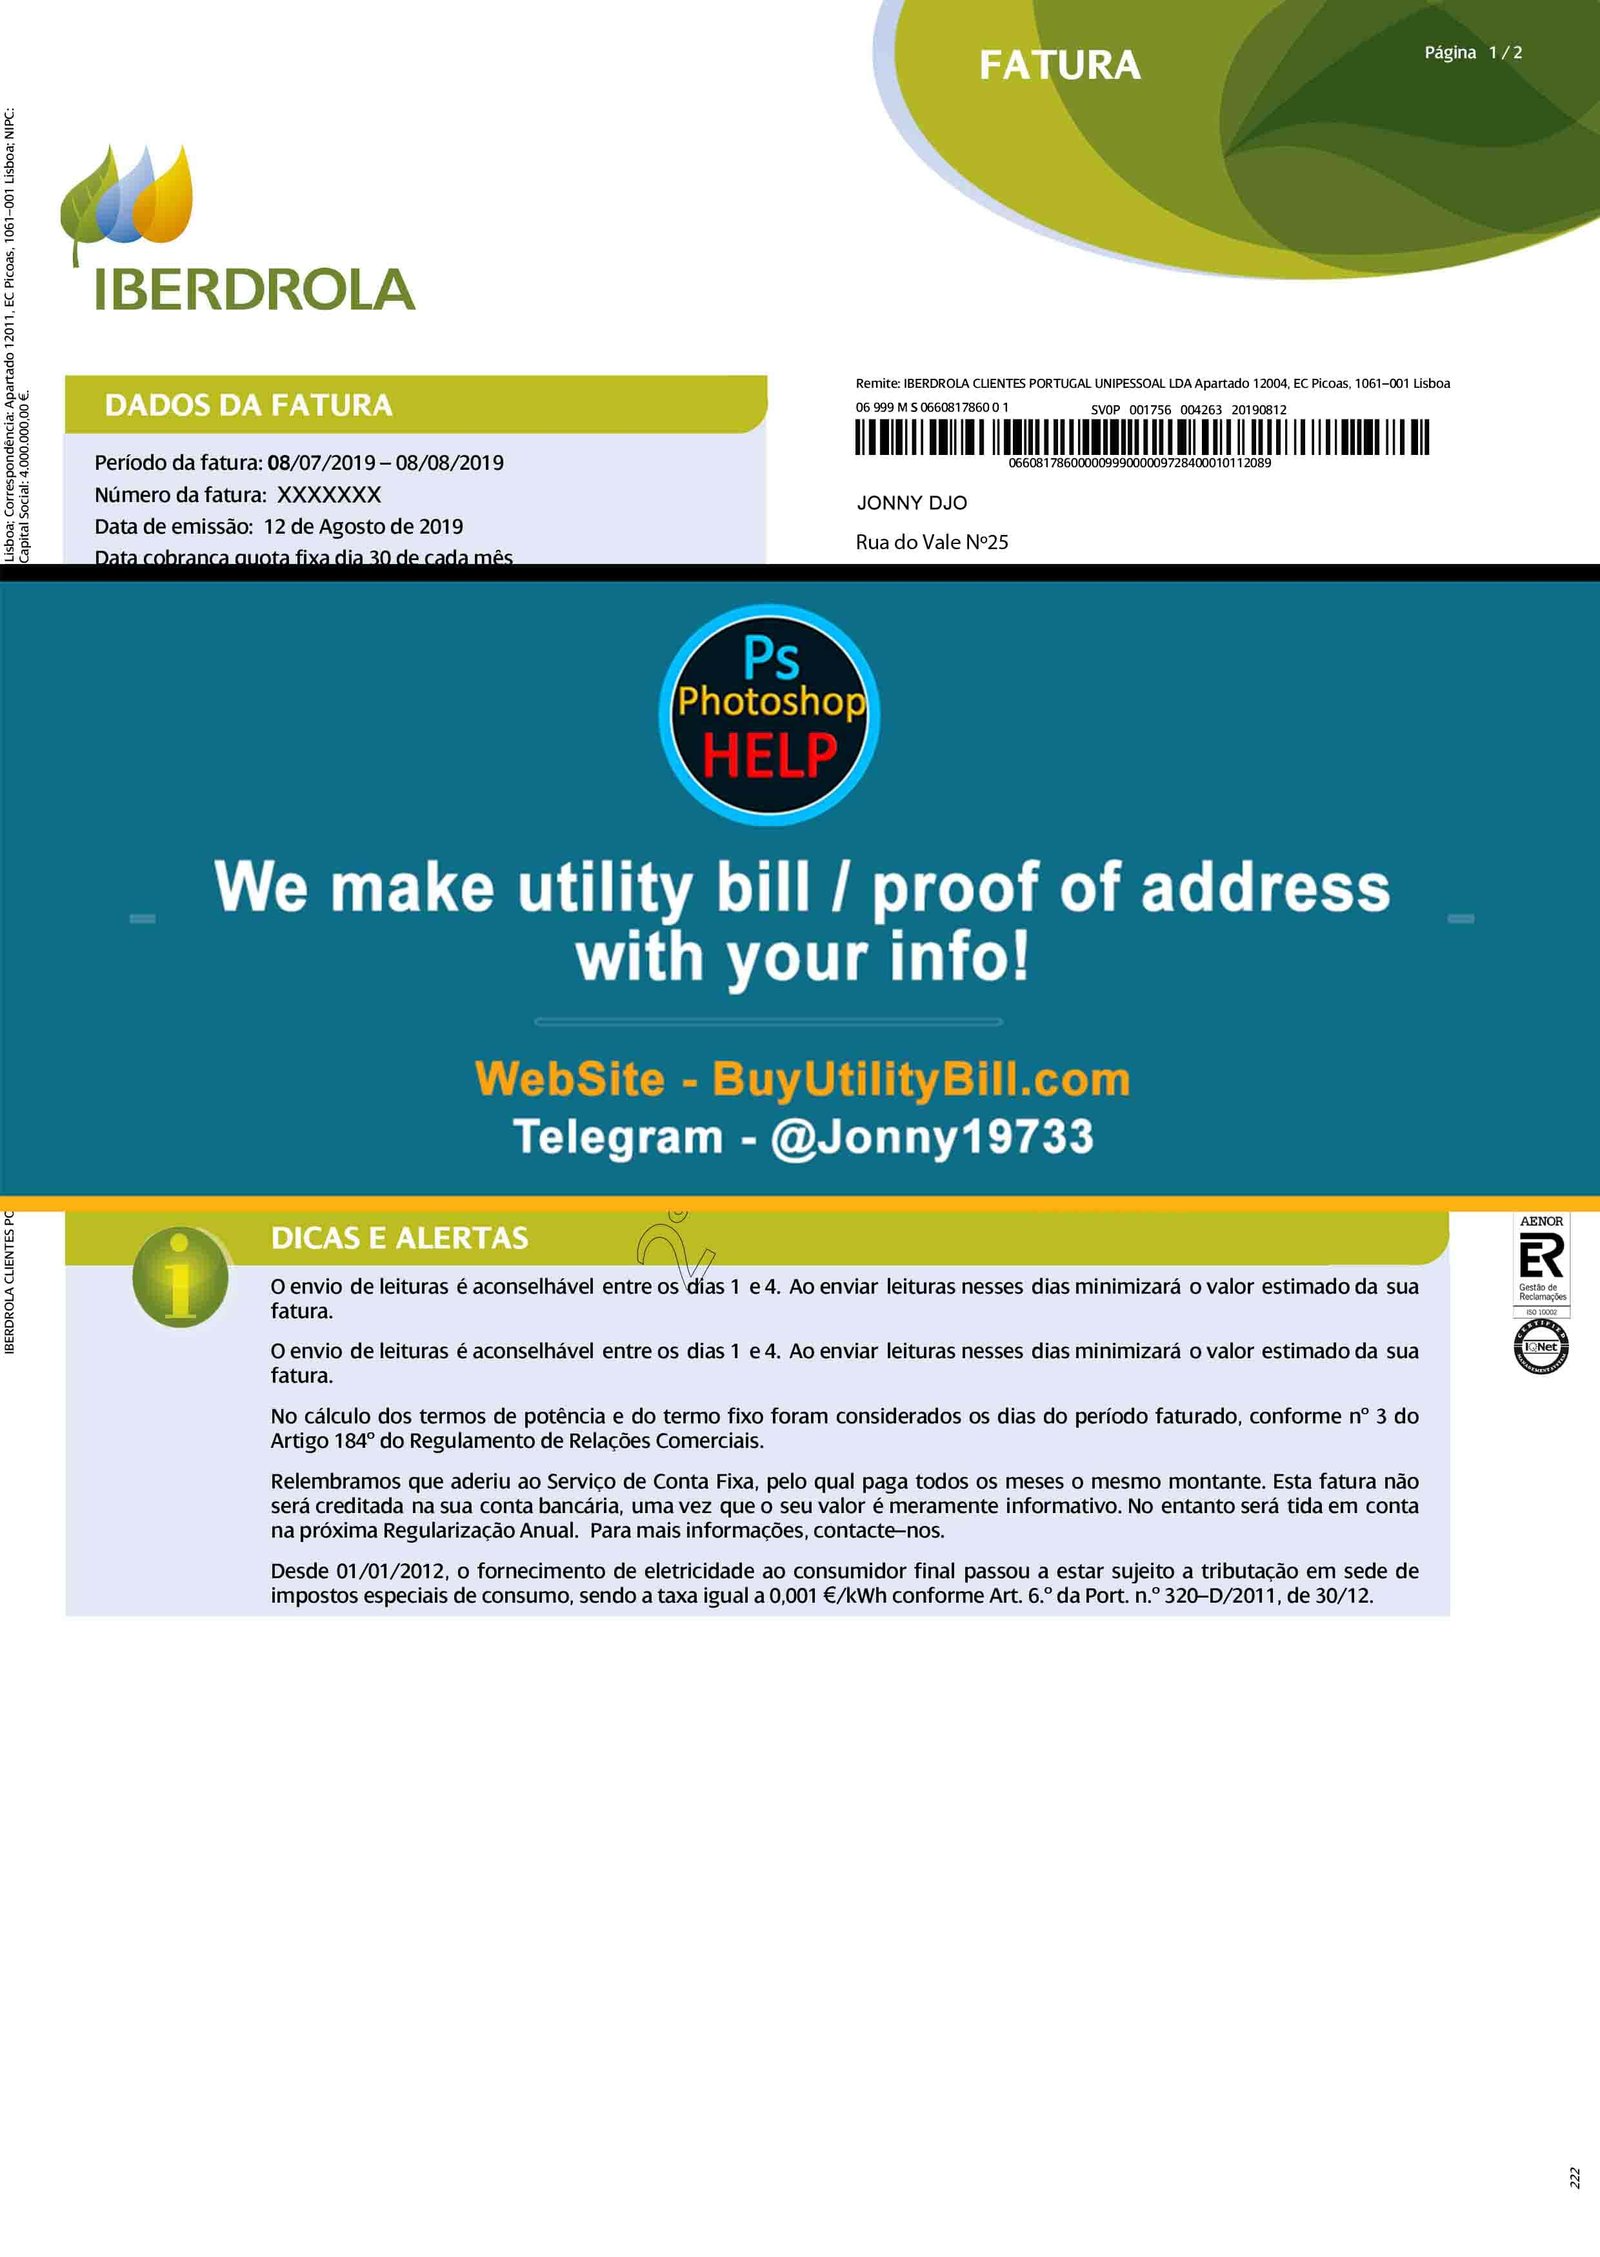 Portugal Energia Fake Utility Bill Eberdrola Fake Utility bill